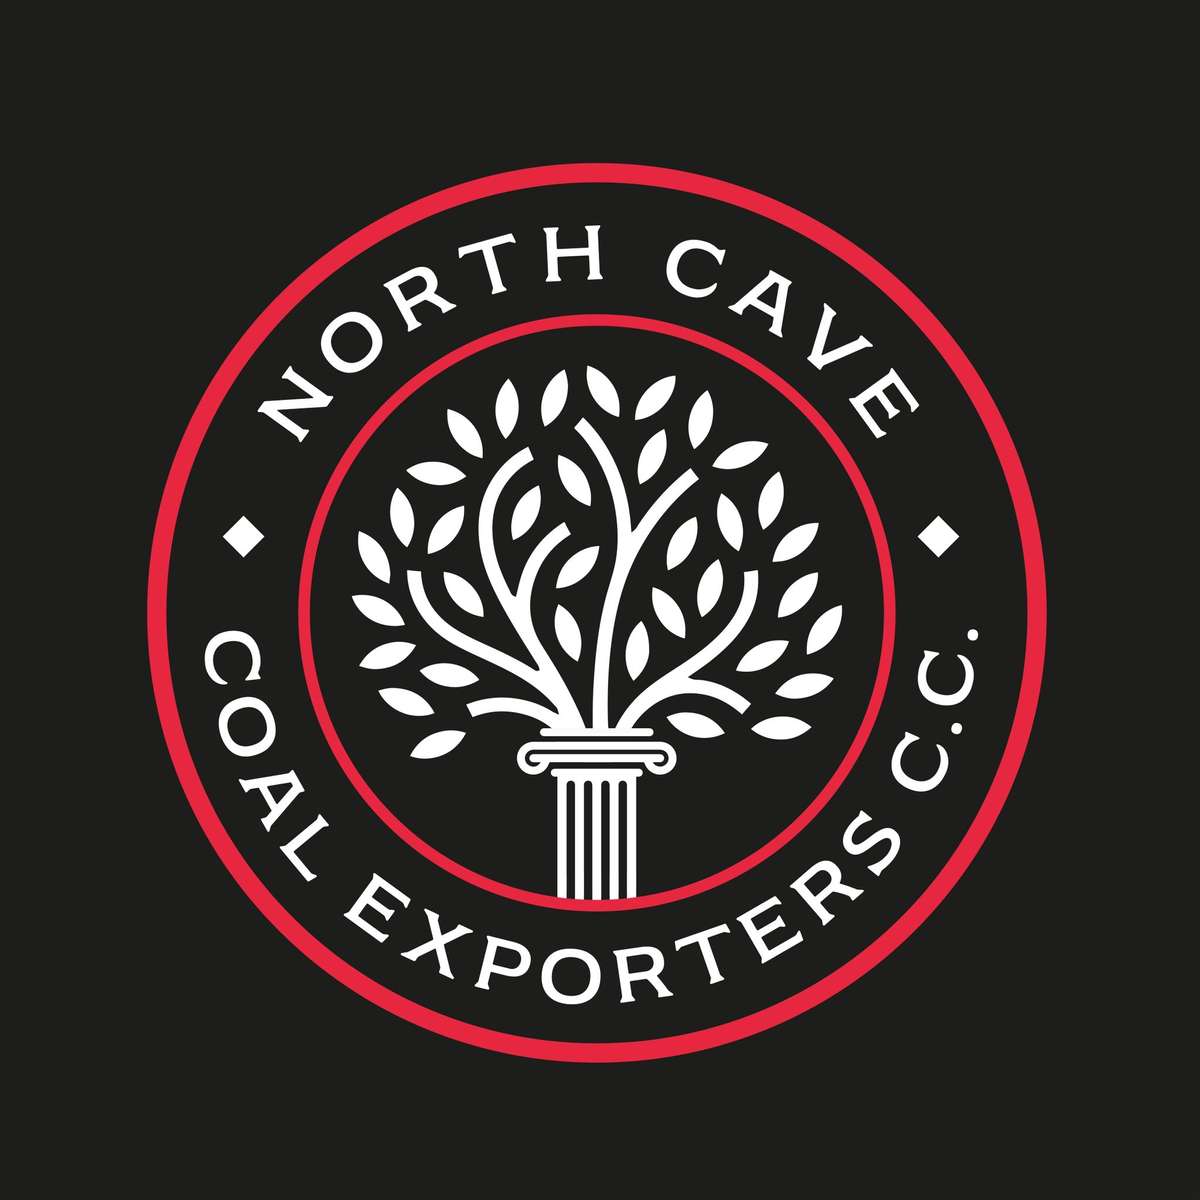 NCCE-logotyp glidande pussel online